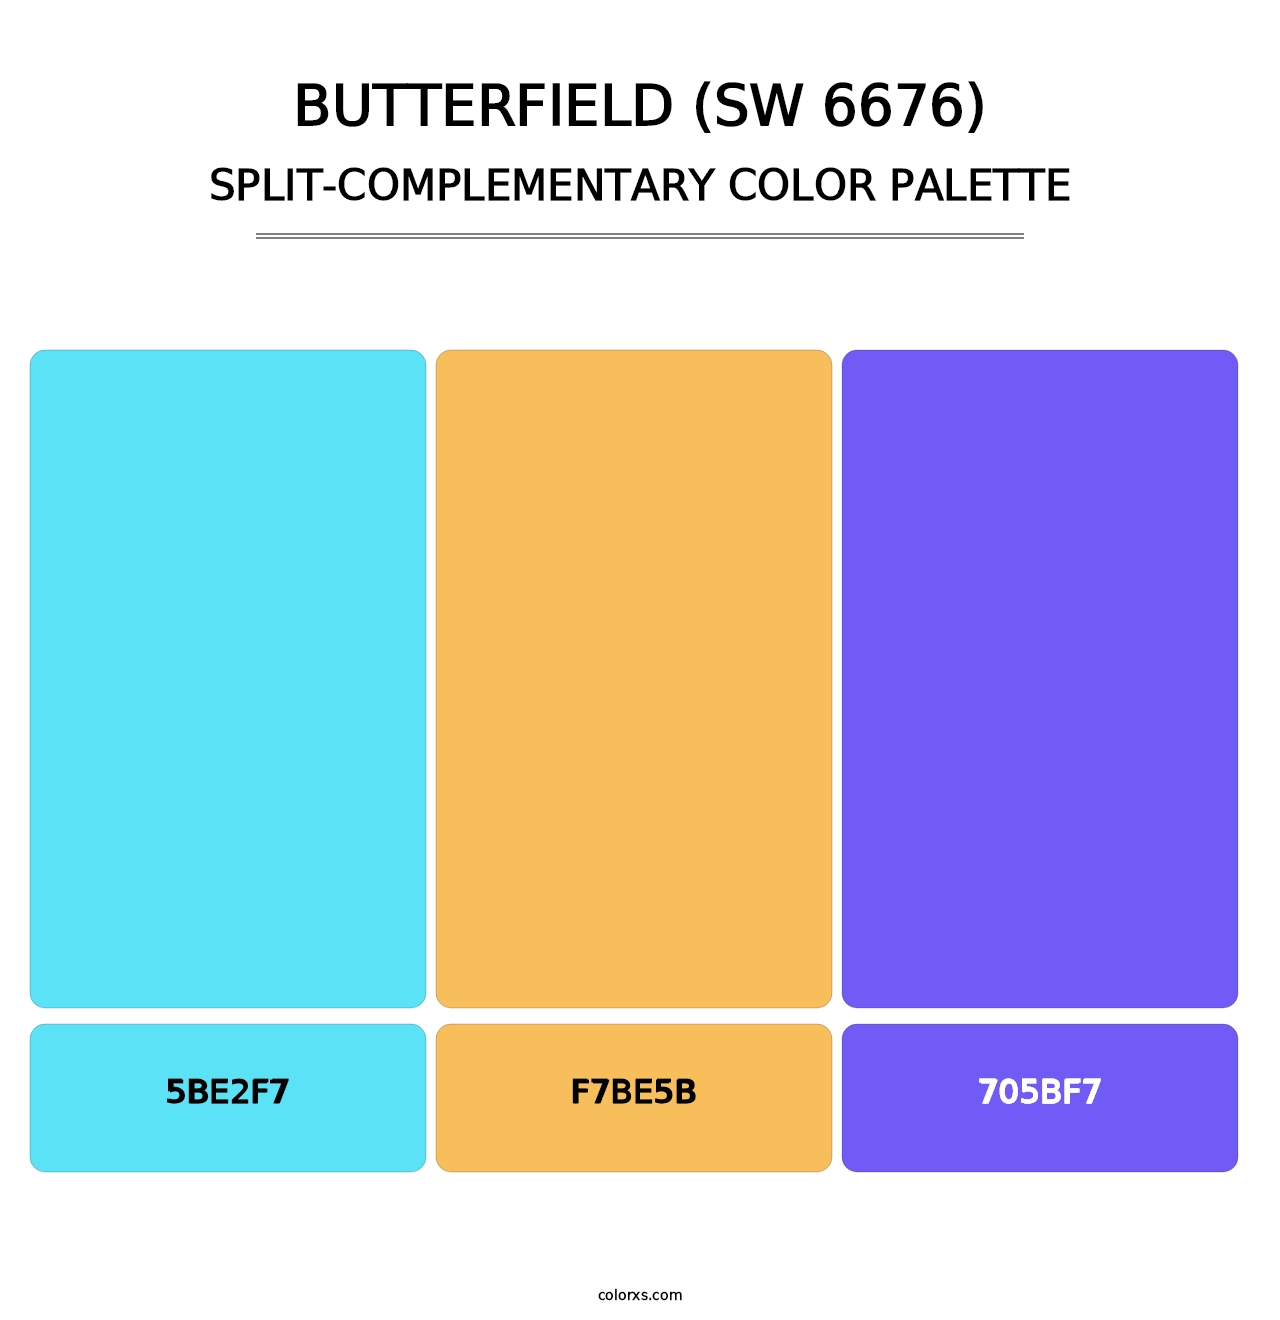 Butterfield (SW 6676) - Split-Complementary Color Palette